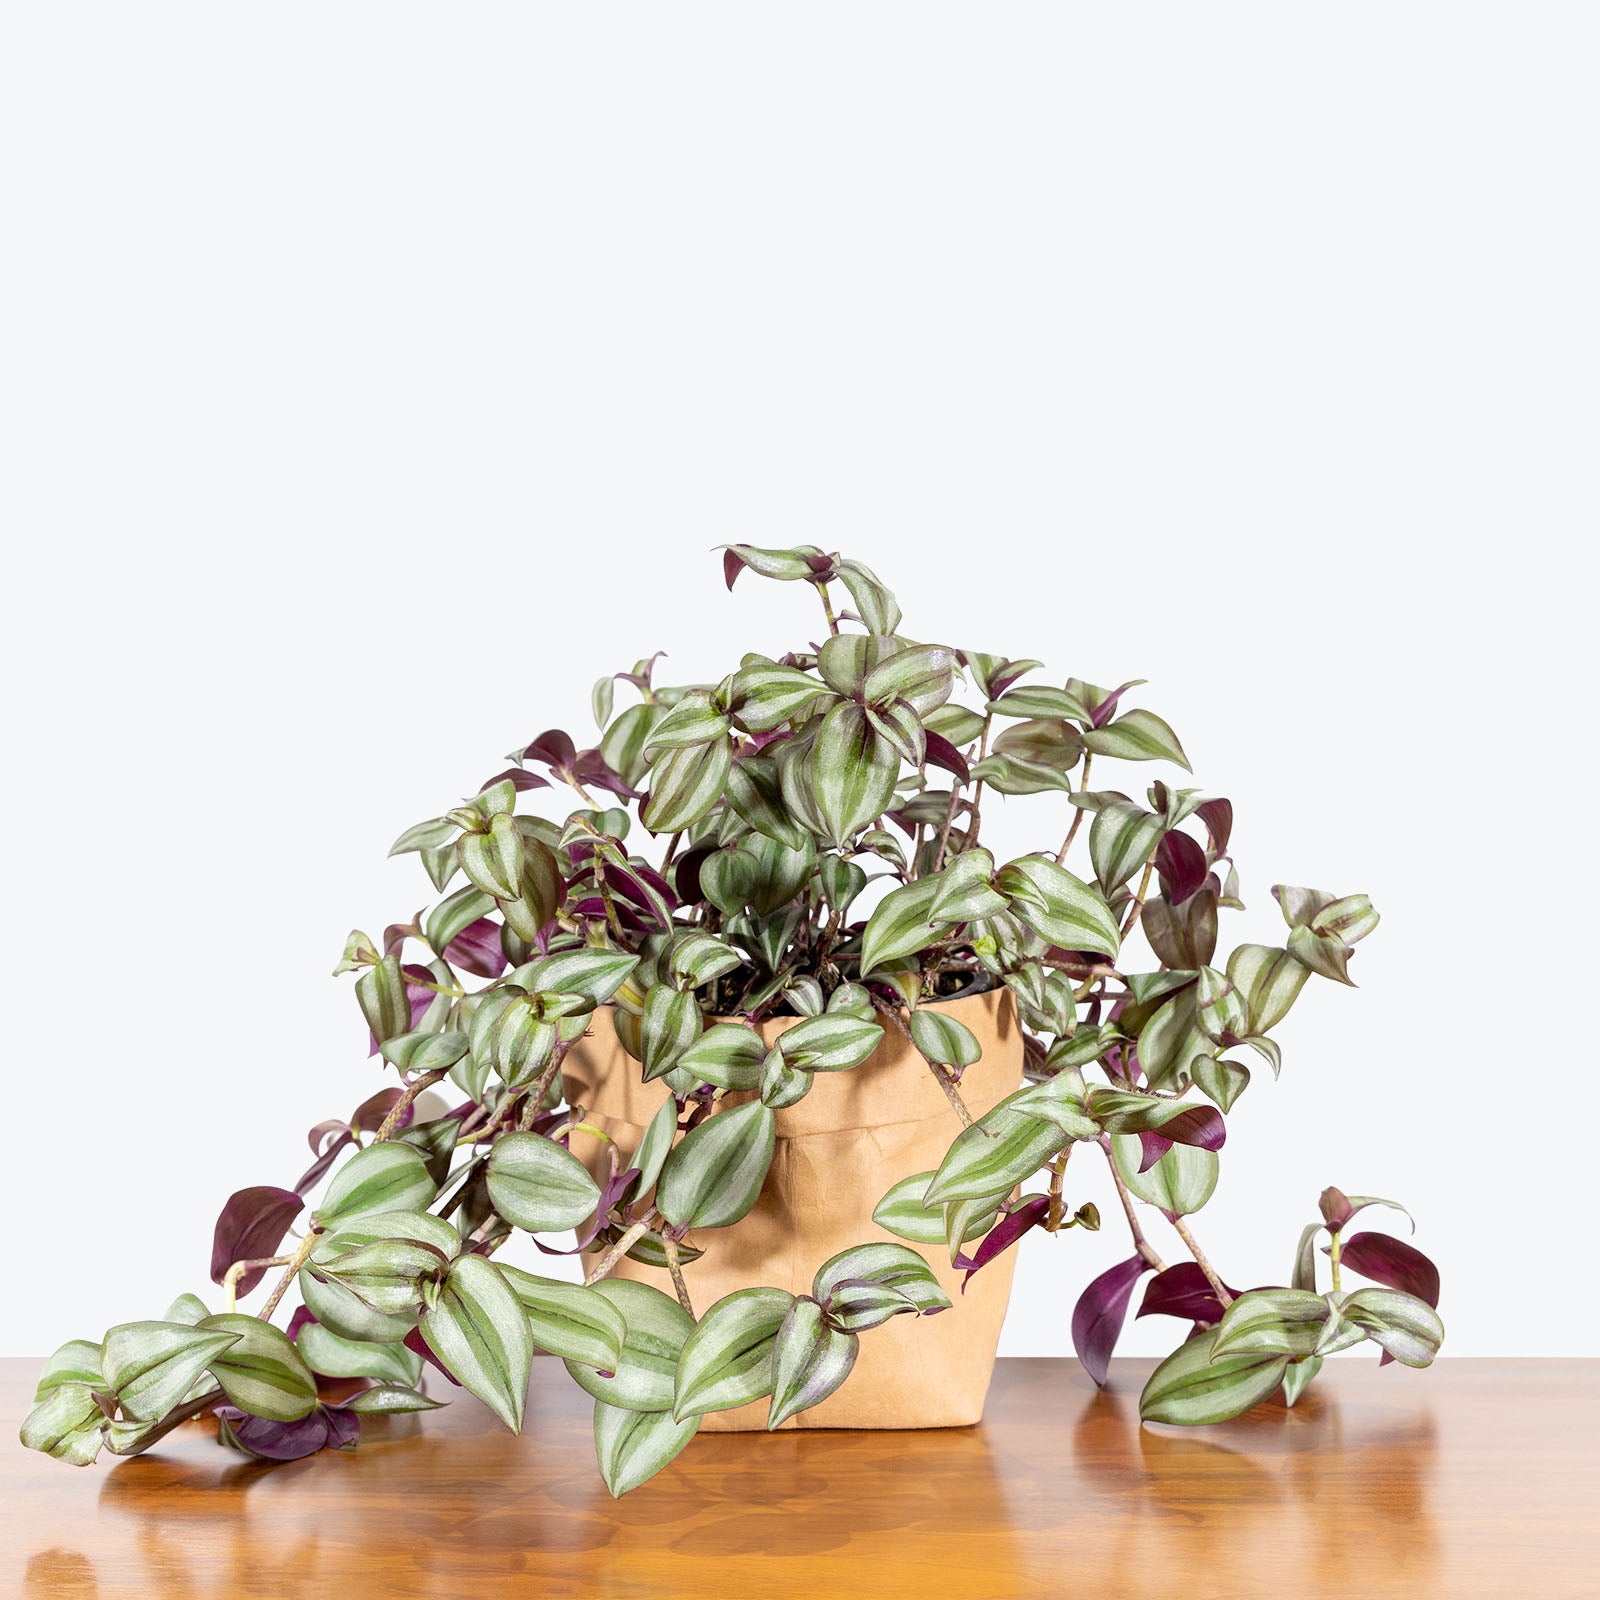 Lily of the Valley - Convallaria majalis - House Plants Delivery Toronto -  JOMO Studio